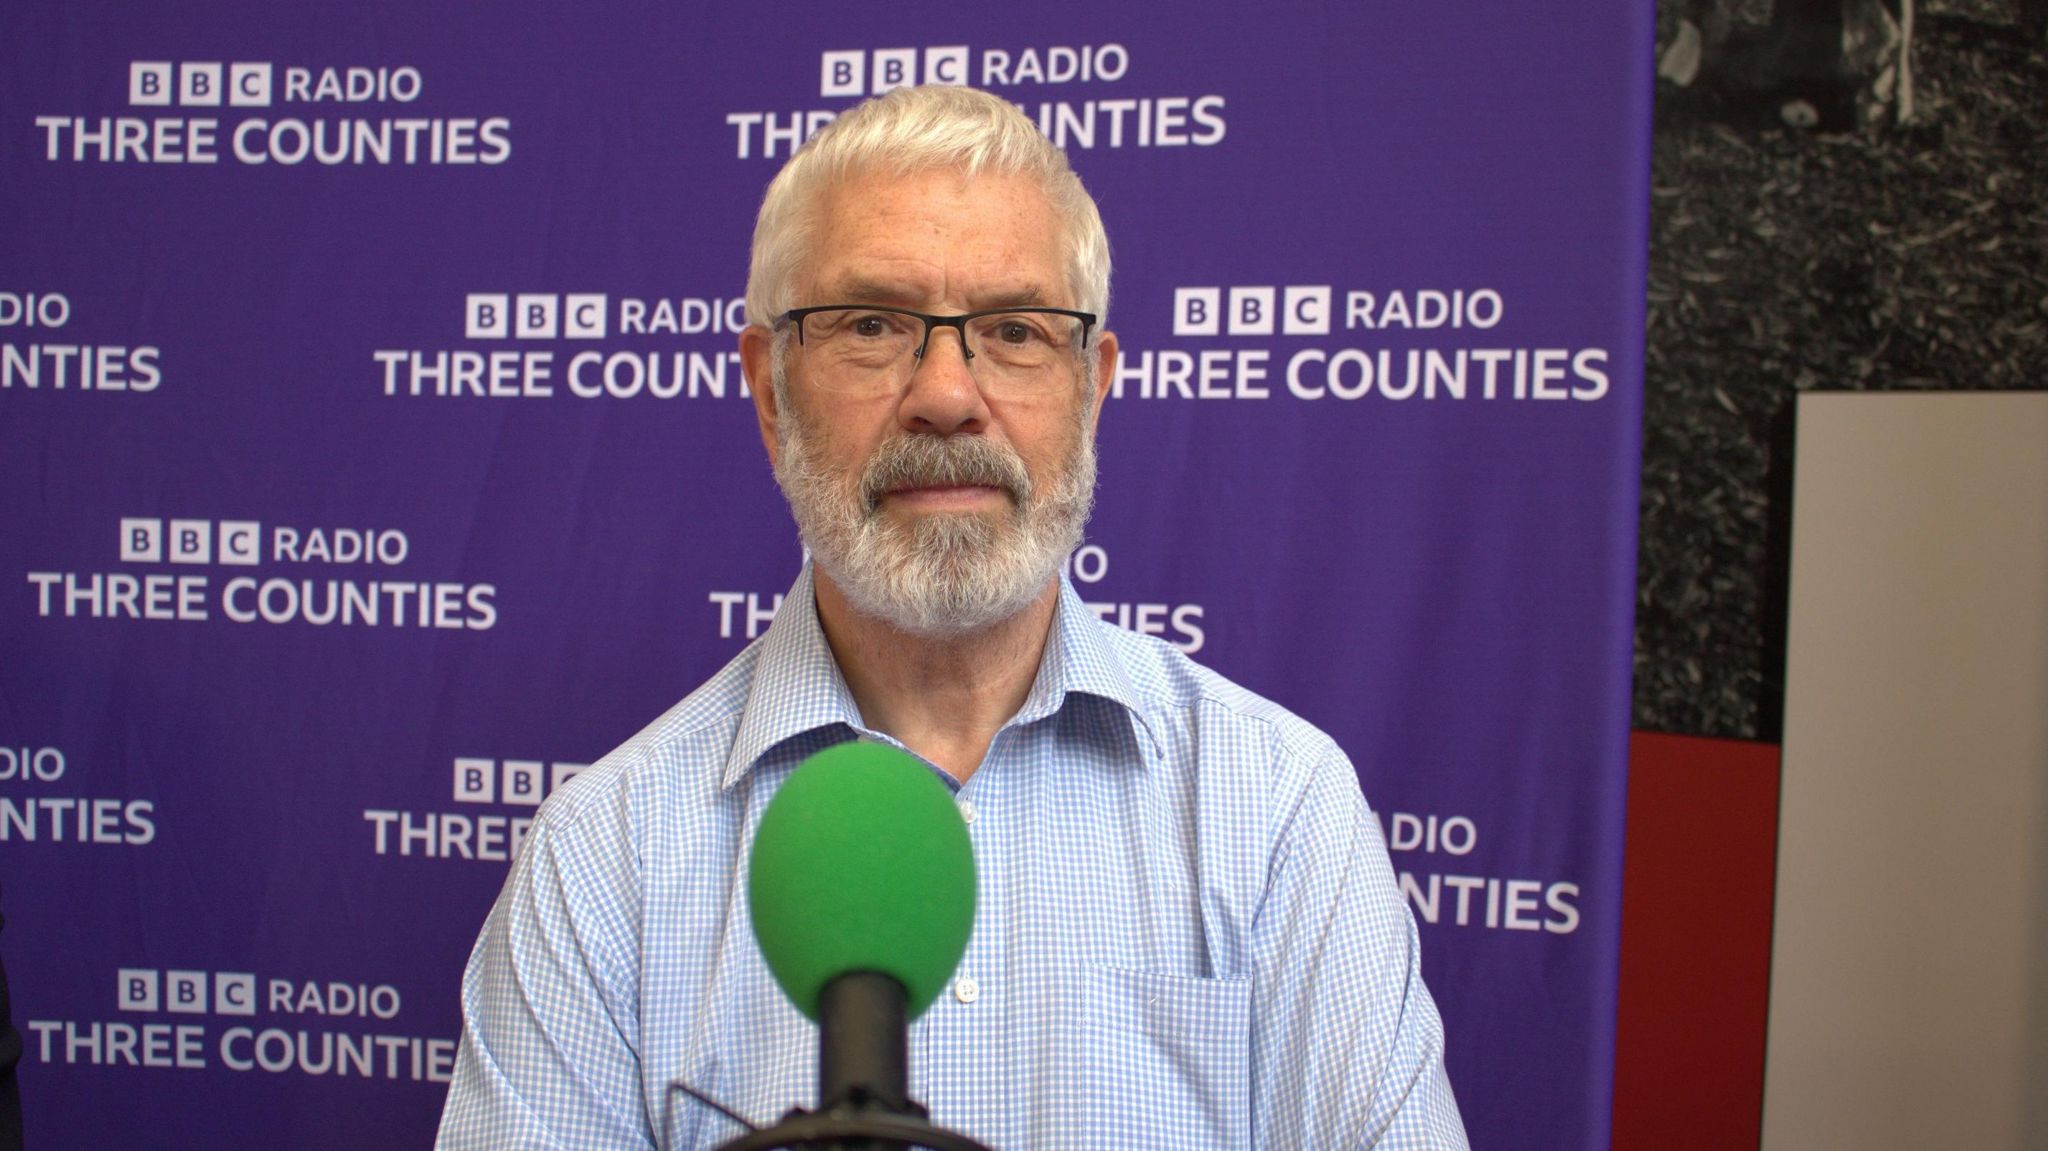 Paul de Hoeste in the BBC Three Counties Radio studios